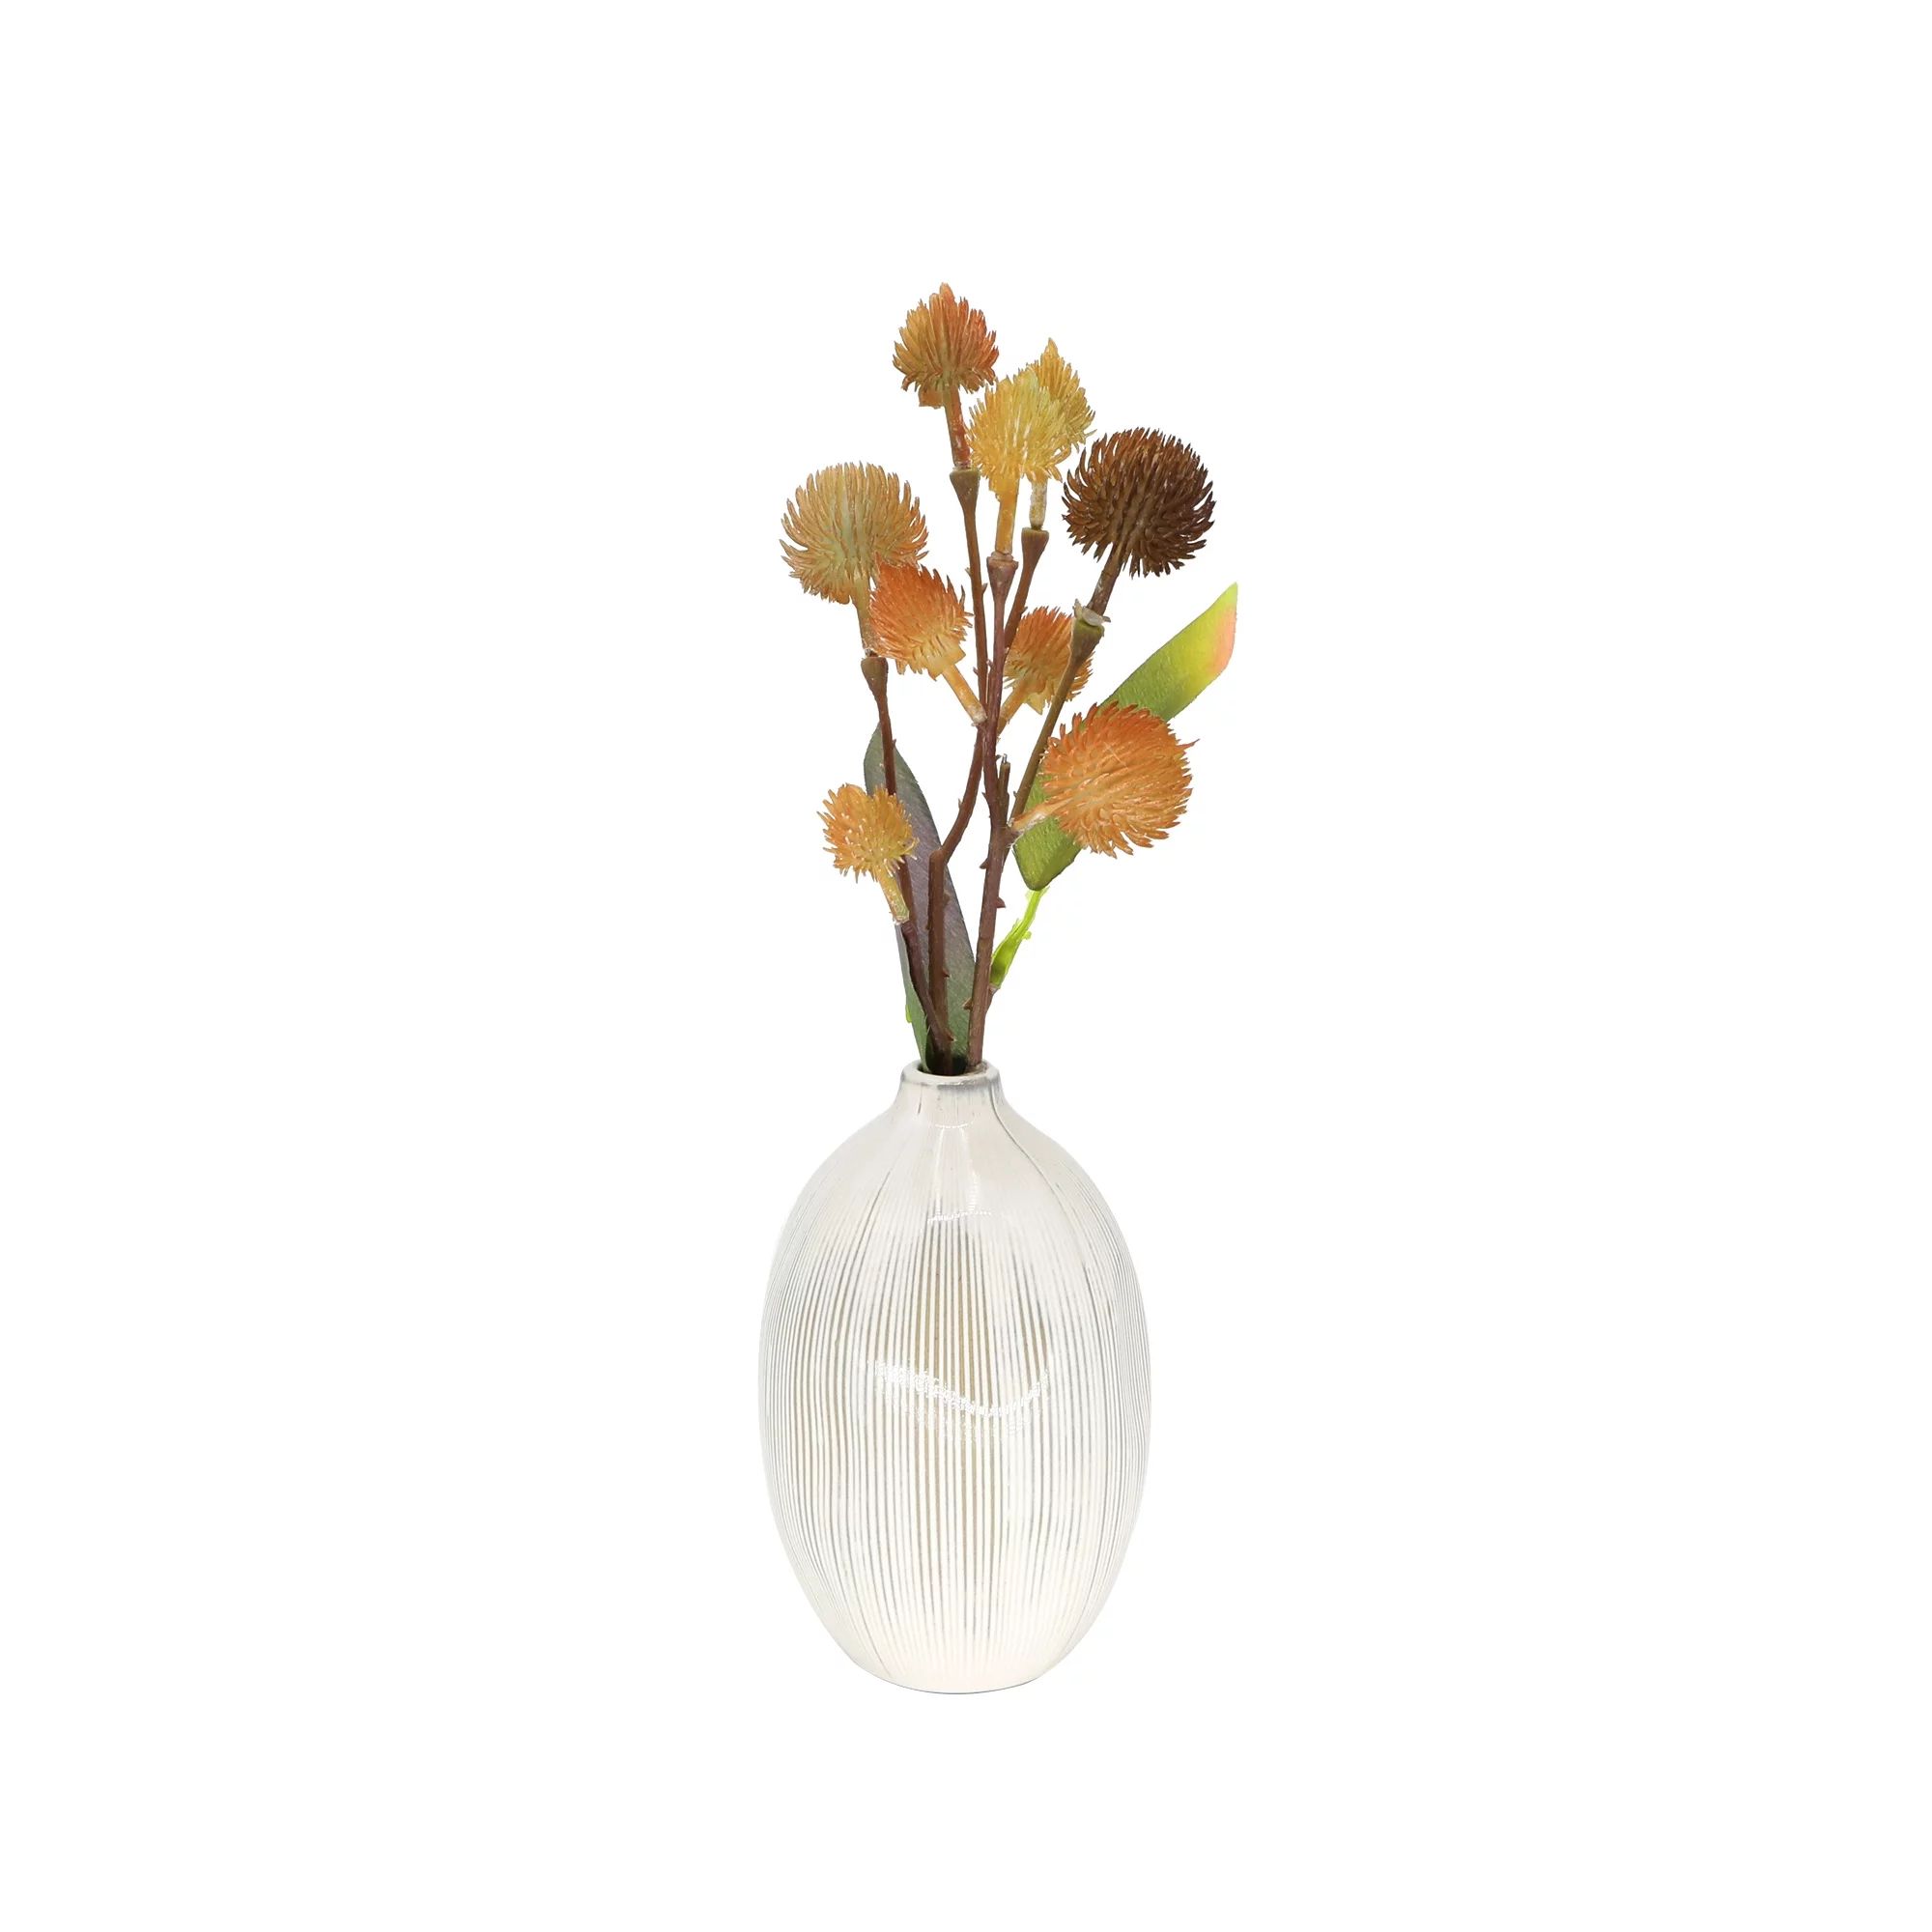 Flora Bunda 12" Artificial Thistle Stems in Ivory Ceramic Vase | Walmart (US)